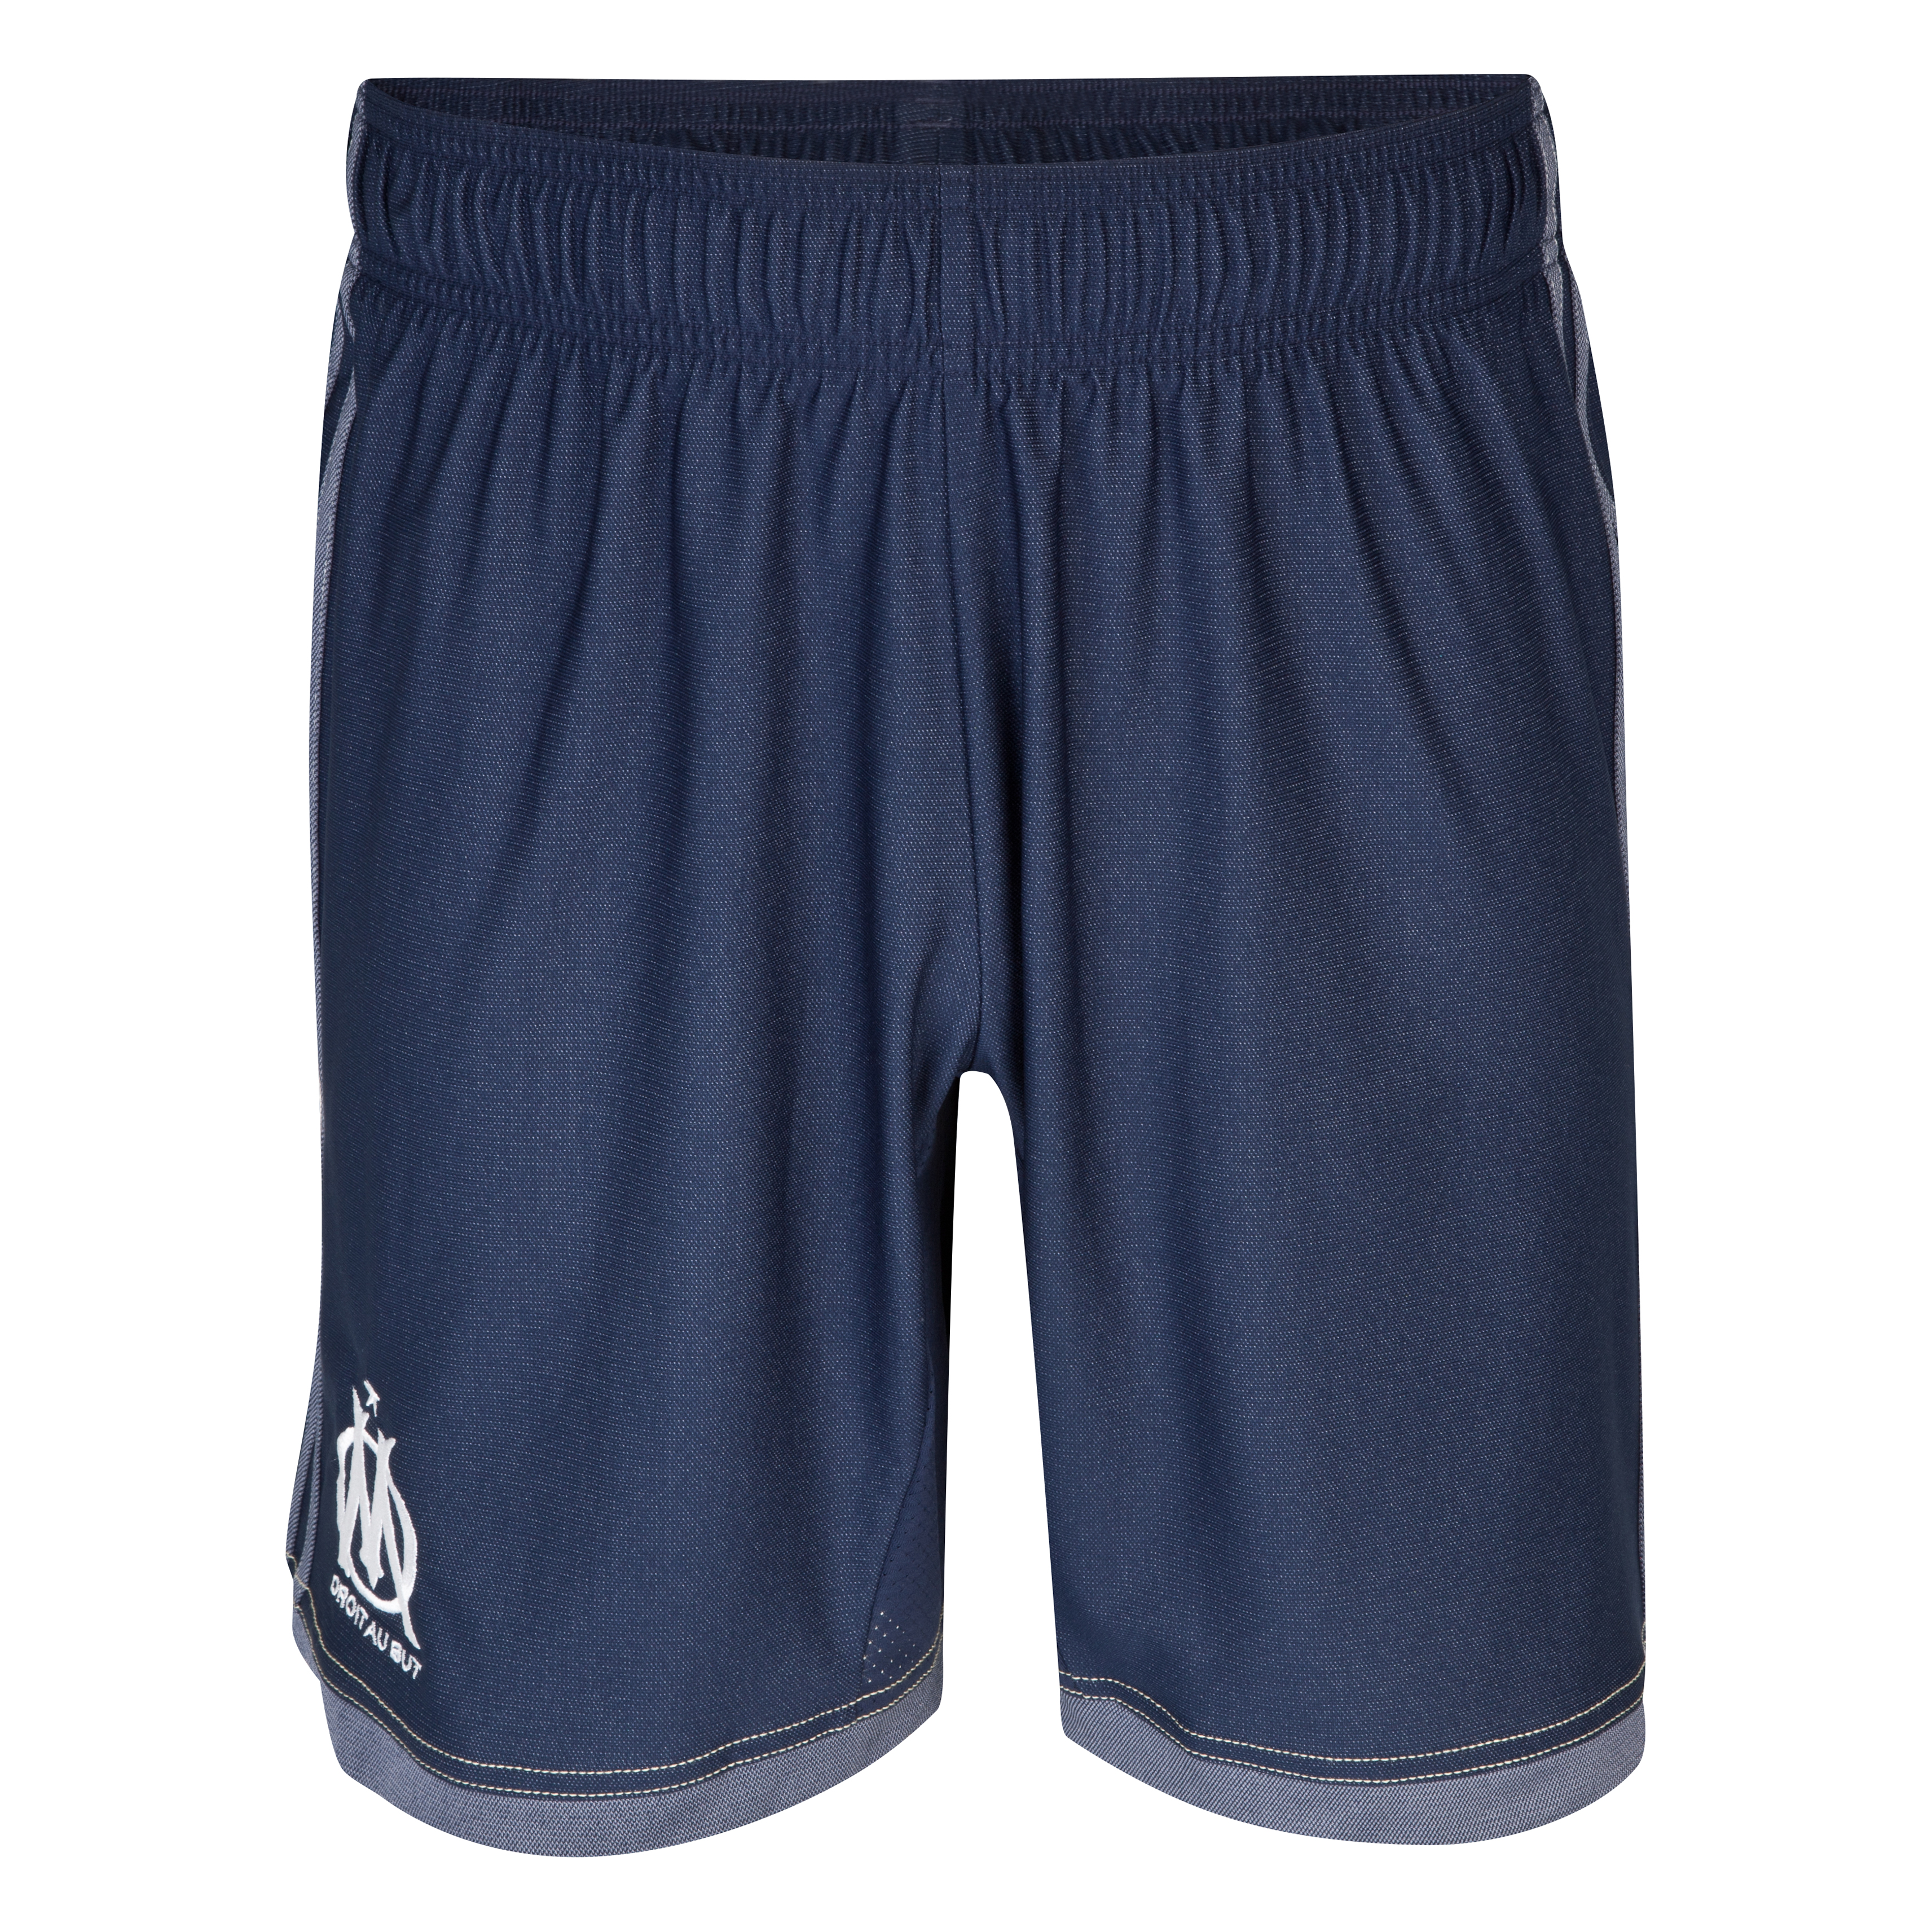 Olympique de Marseille Away Shorts 2013/14 - Mens Lt Blue